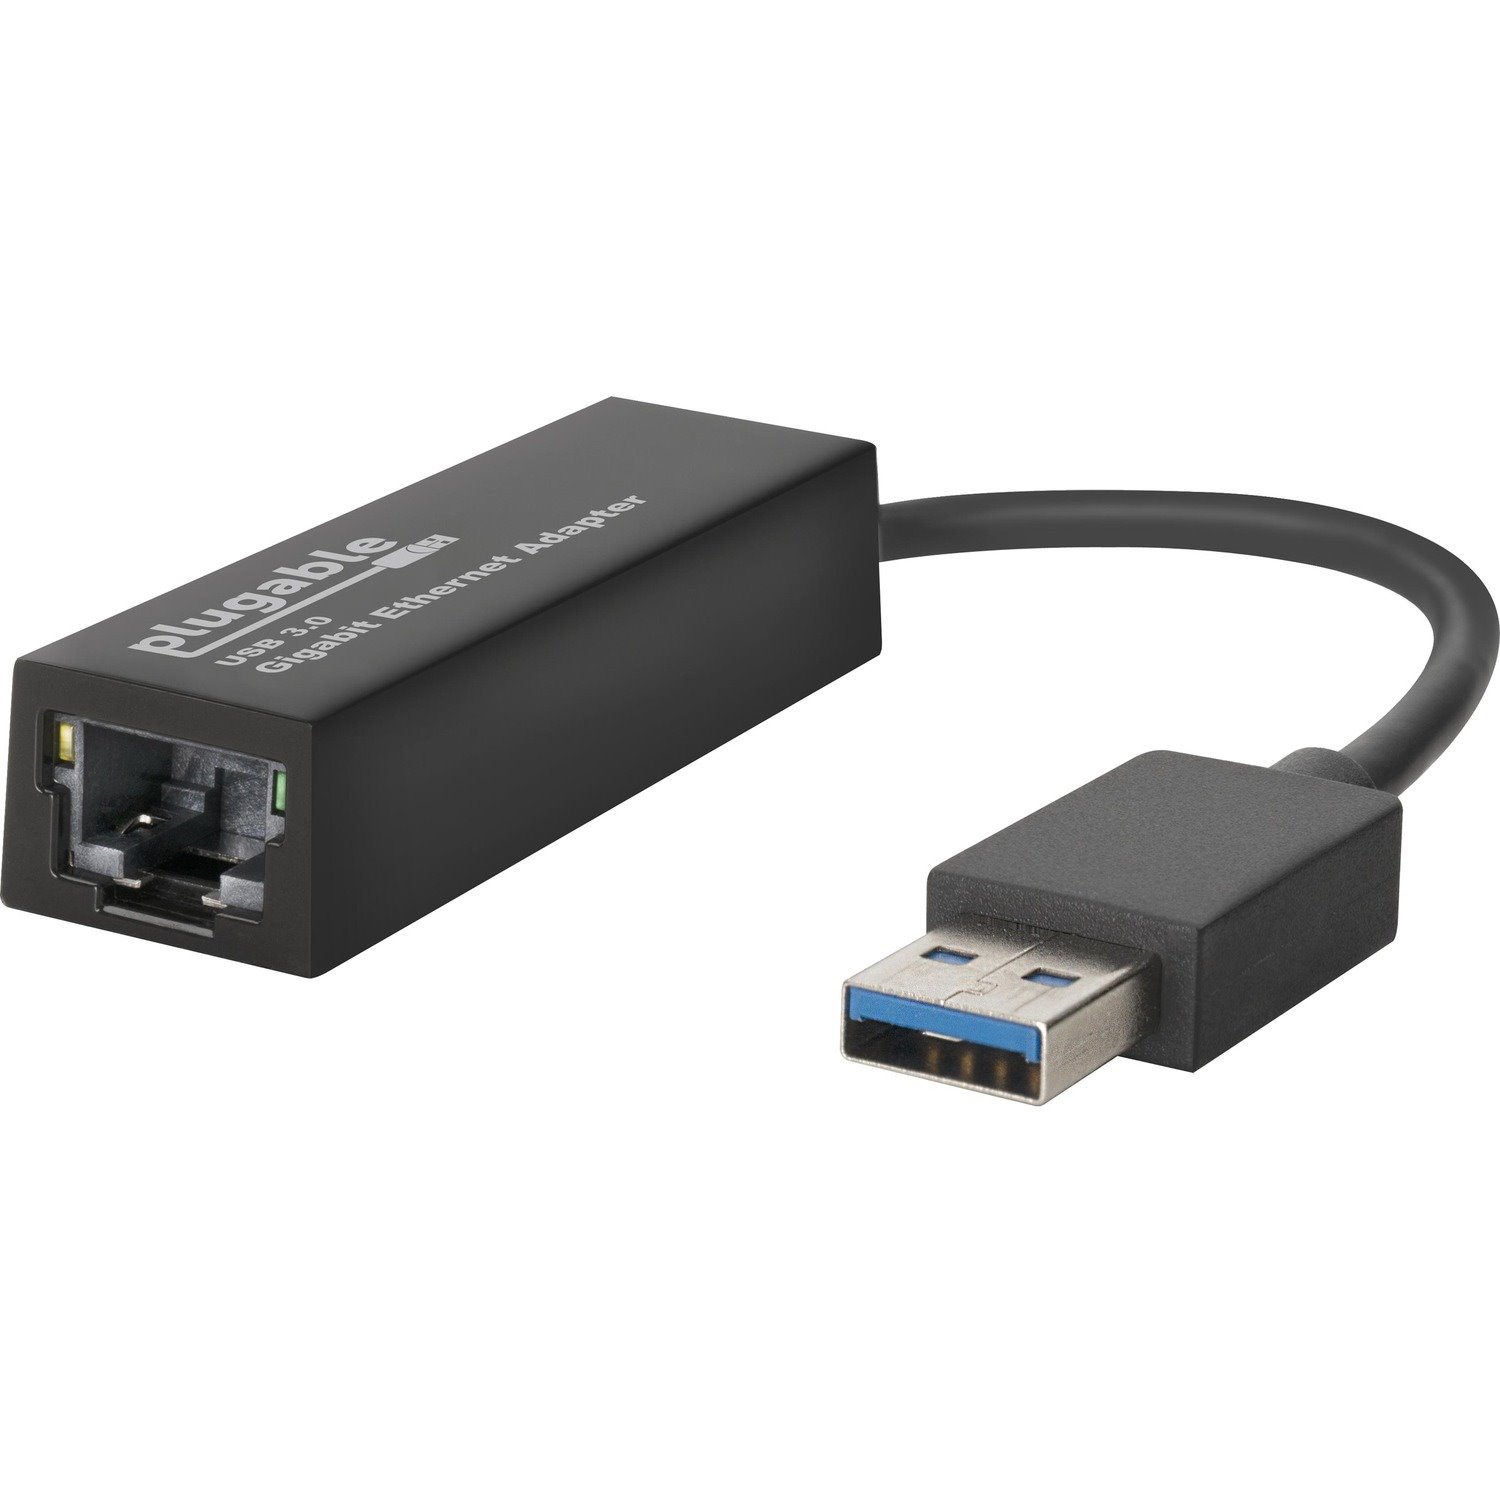 Plugable USB to Ethernet Adapter, USB 3.0 to Gigabit Ethernet